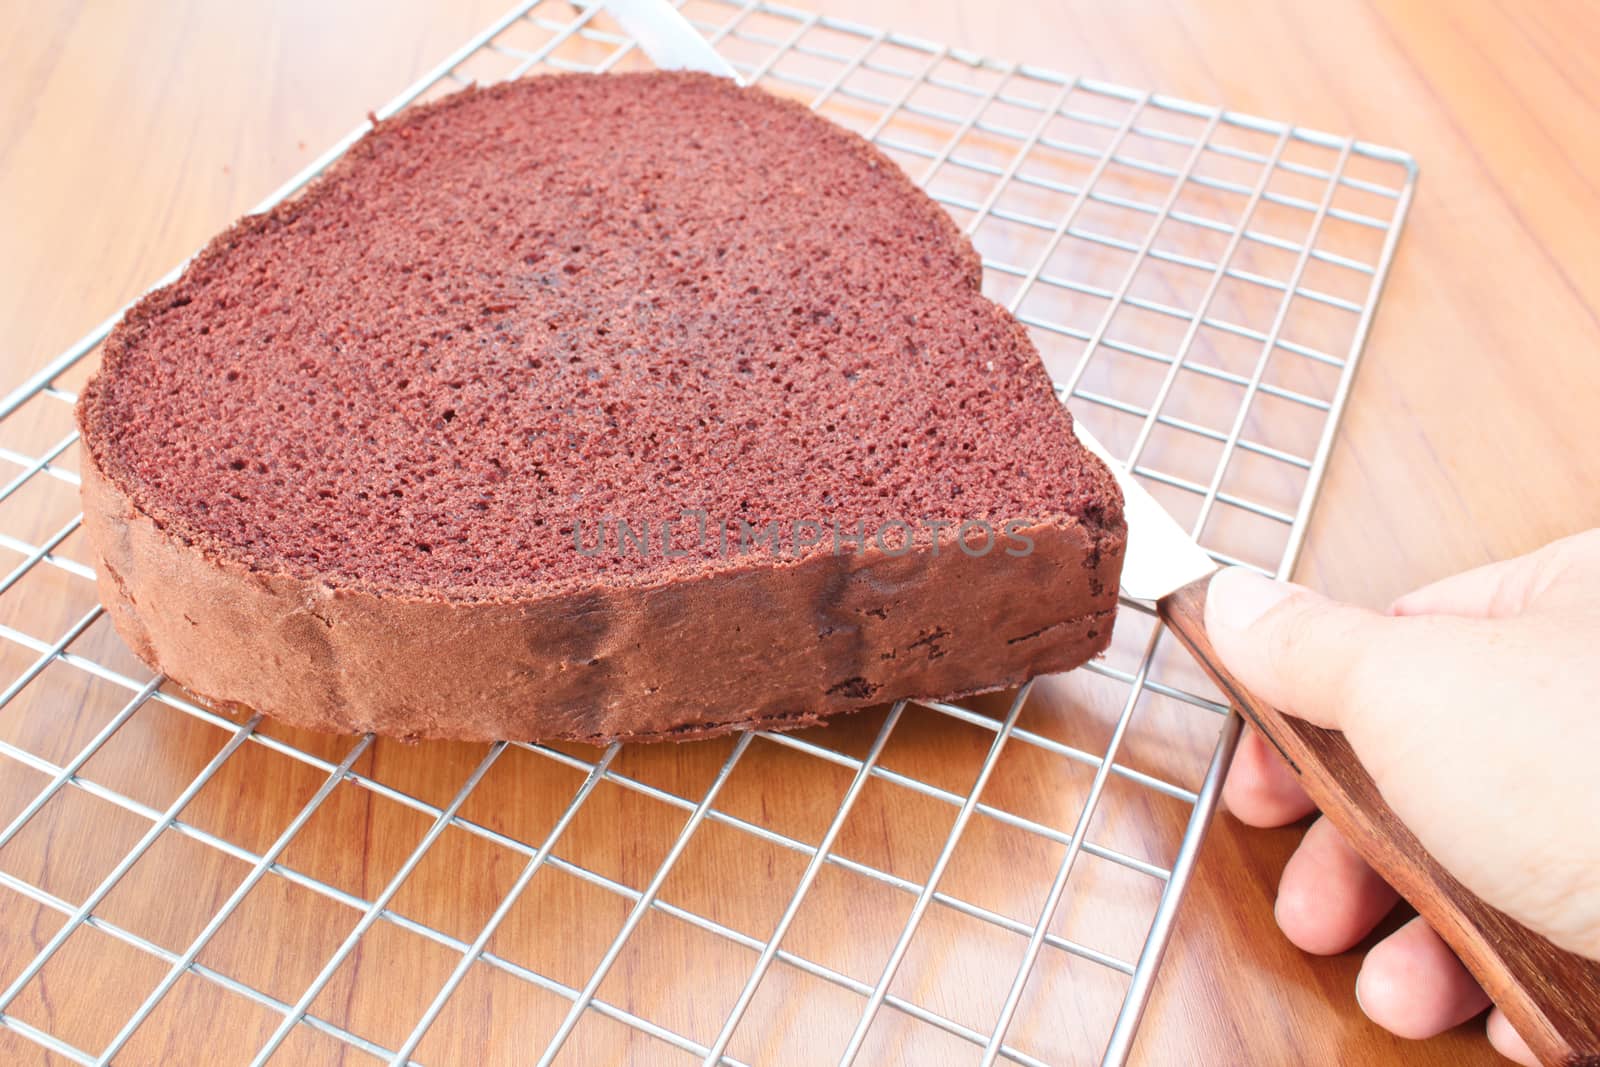 cutting chocolate cake on layers, making chocolate cake.